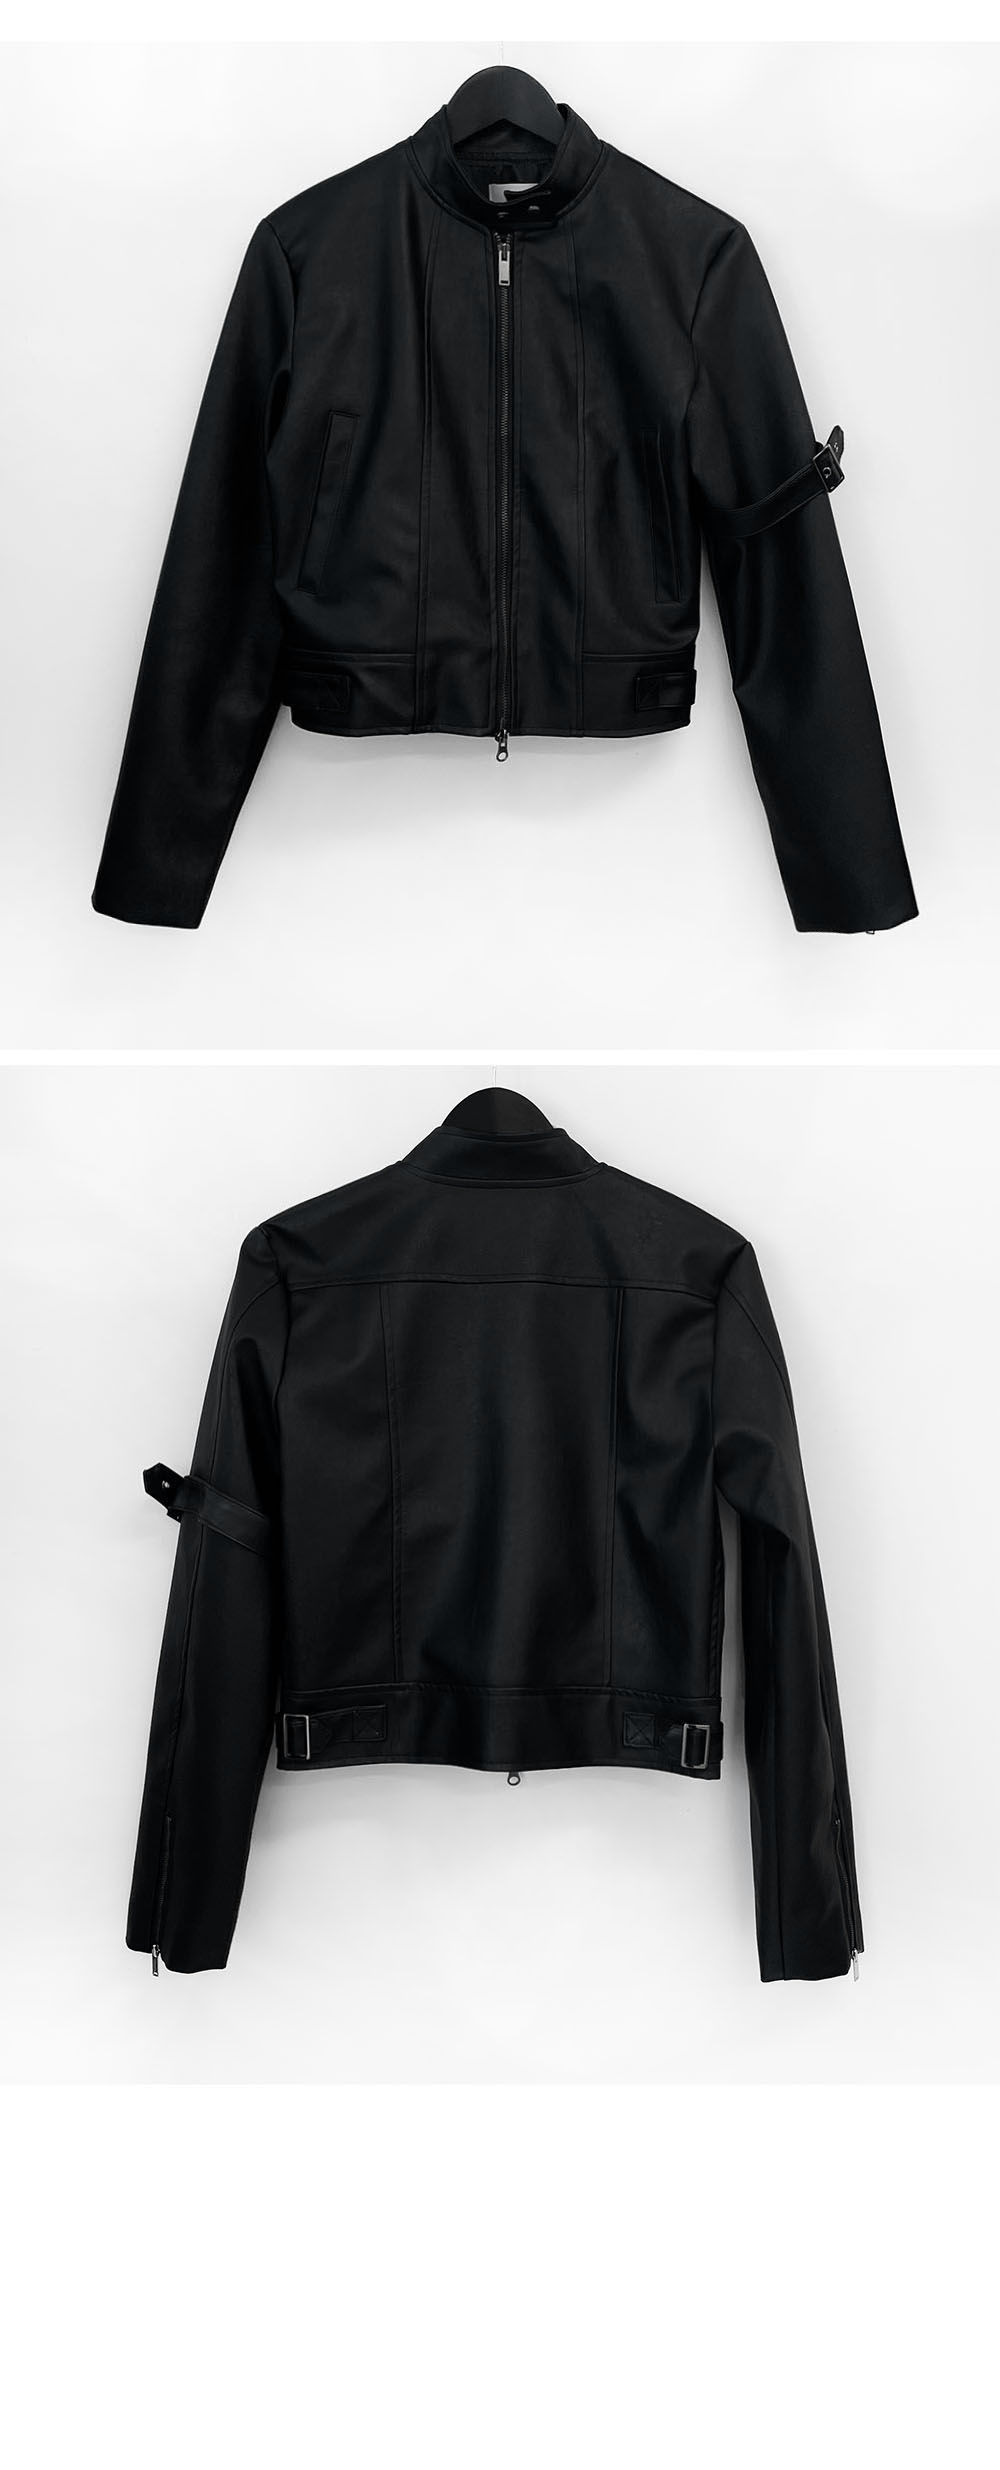 Jacket charcoal color image-S1L10